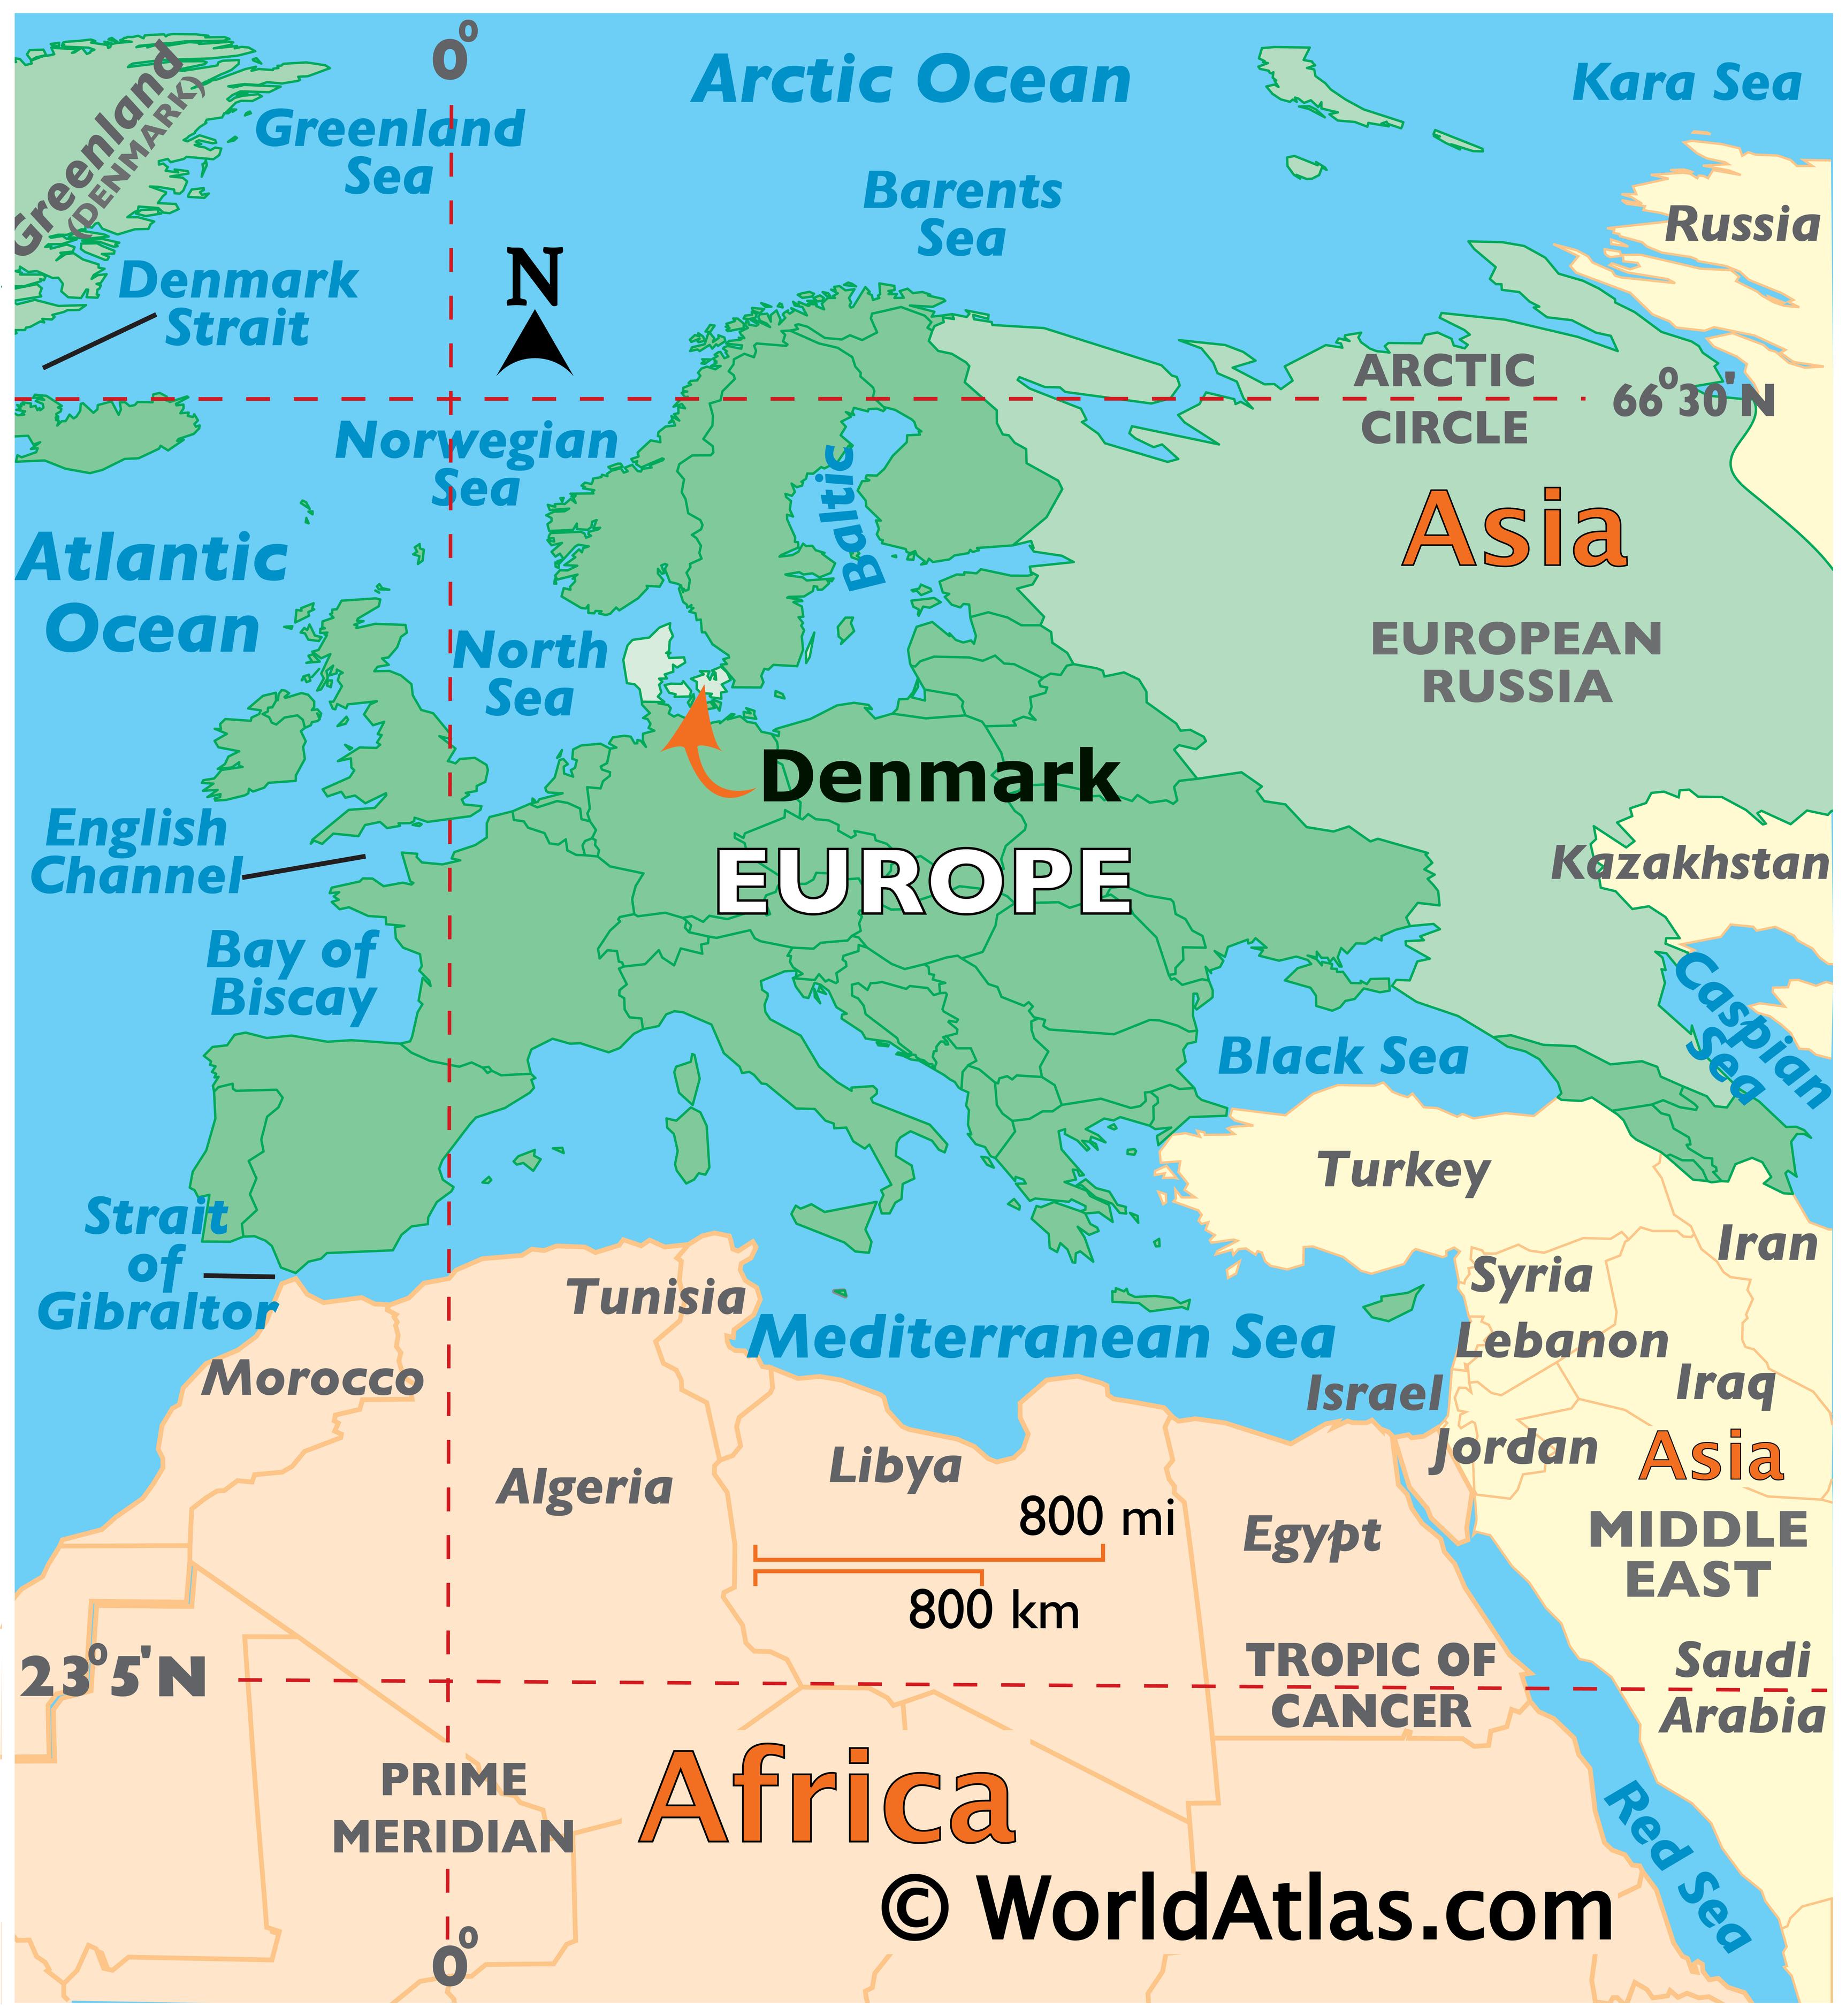  /><br/><p>Denmark On A Map</p></center></div>
<script type='text/javascript'>
var obj0=document.getElementById(